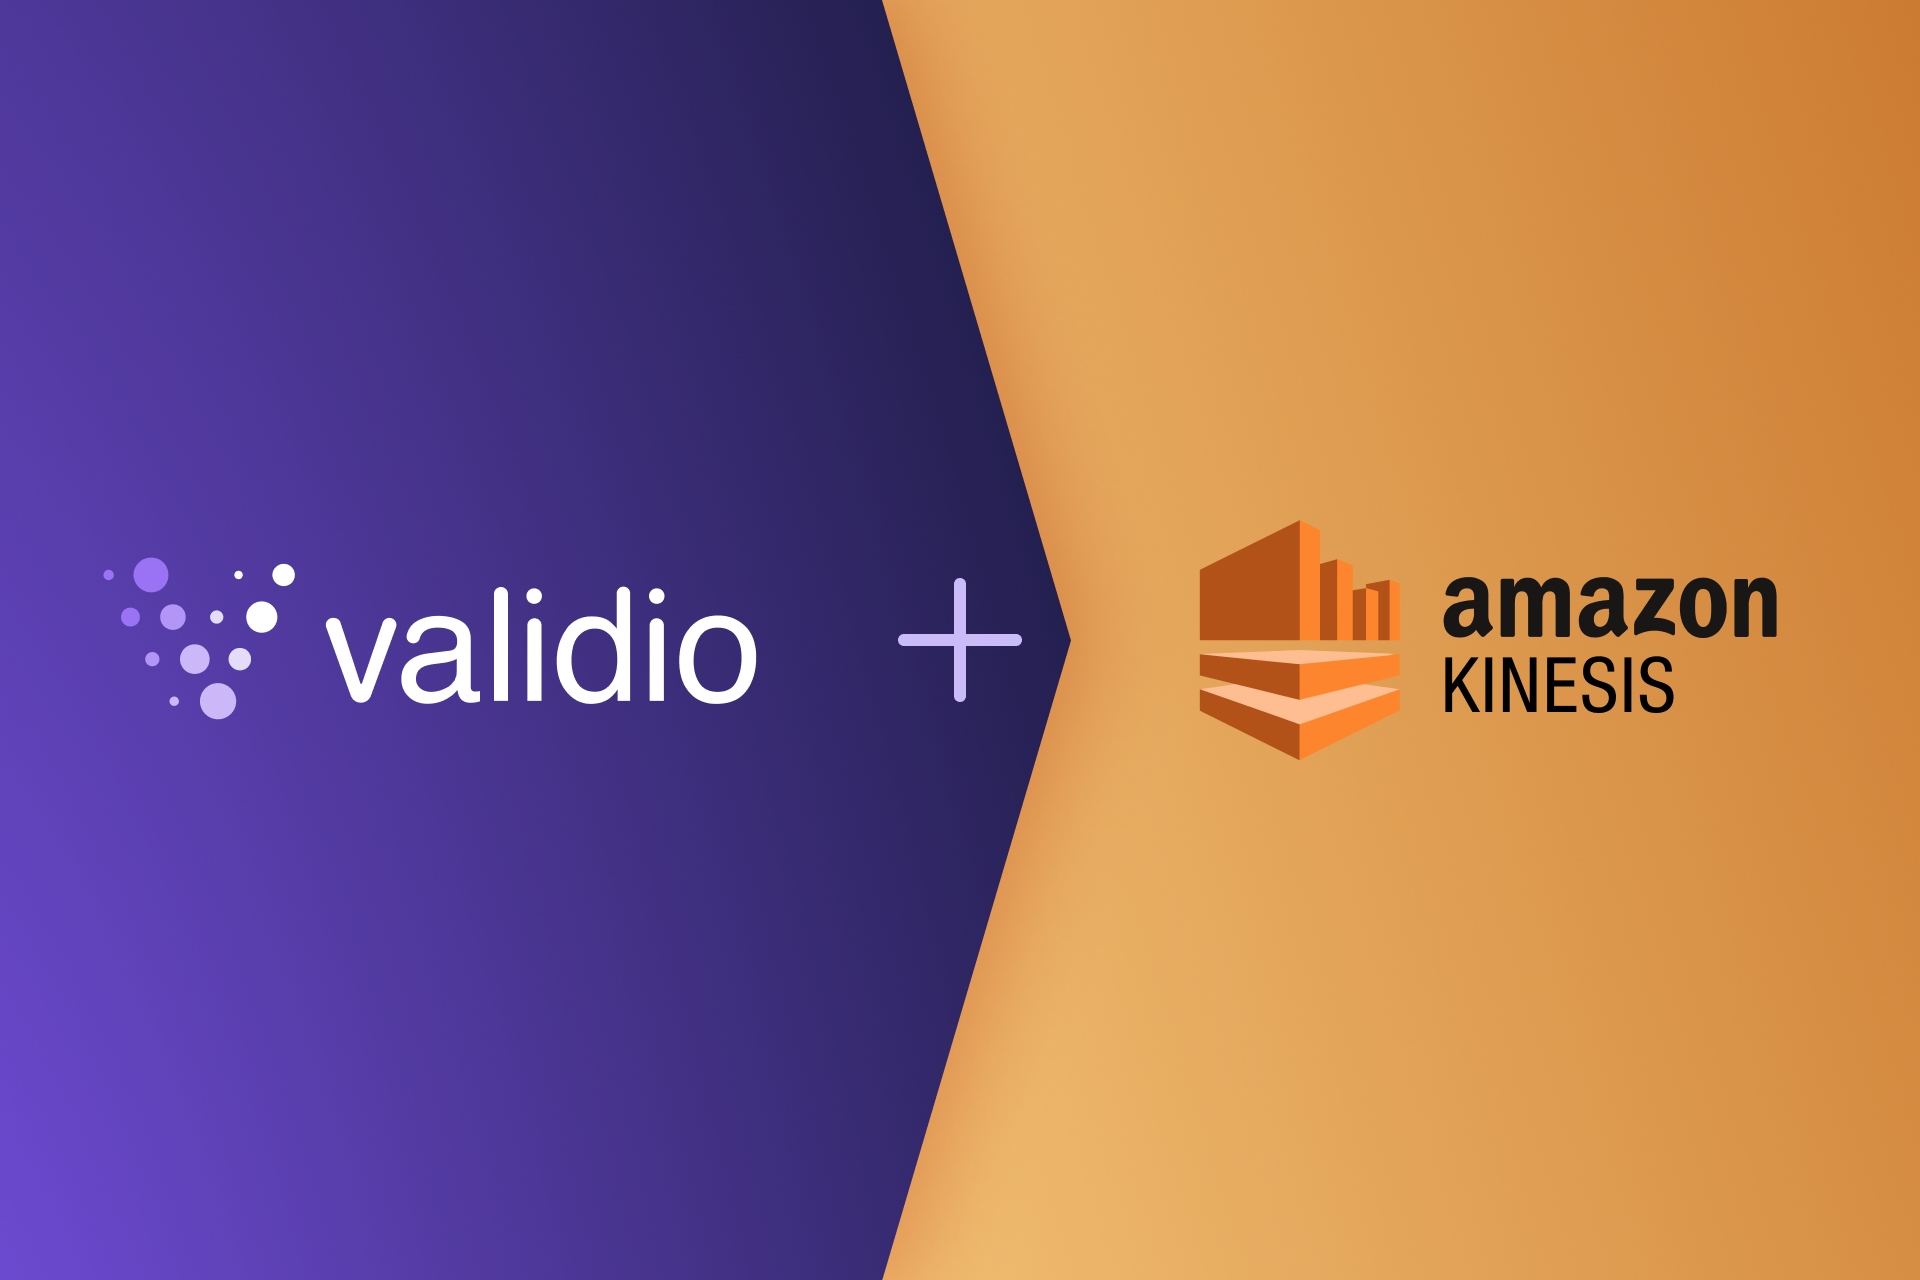 Validio+Amazon Kinesis